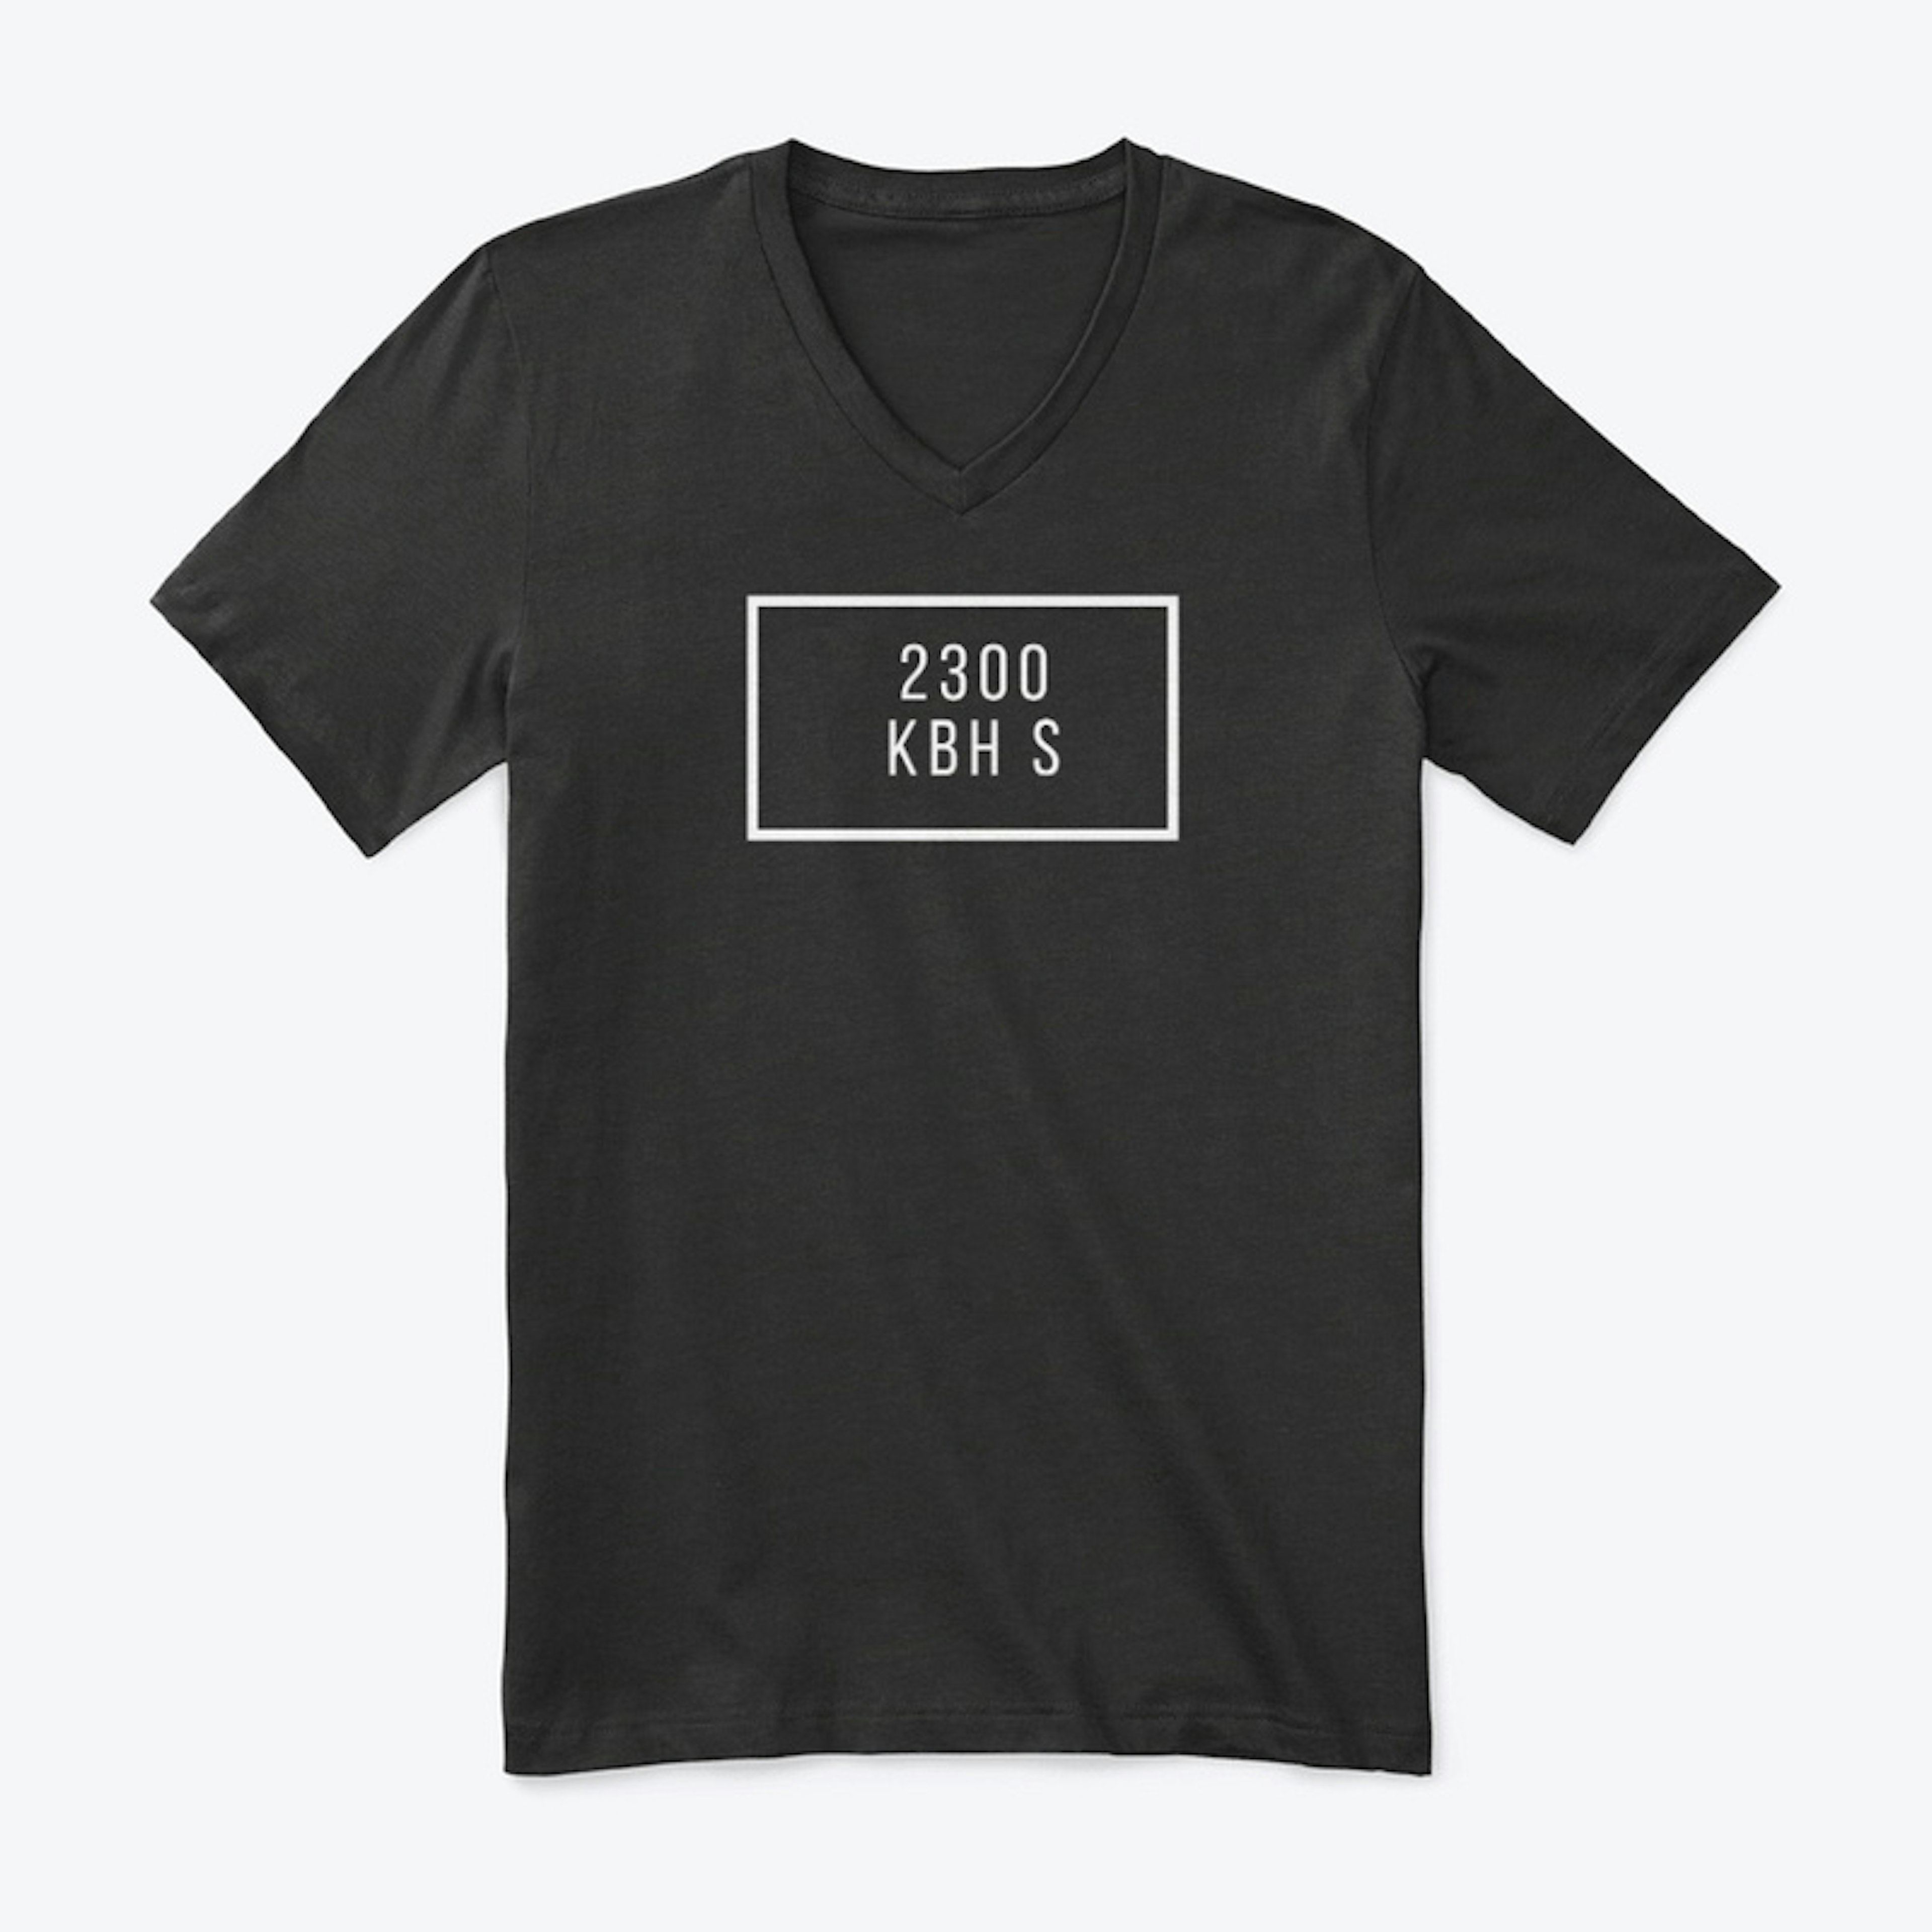 2300 KBH S t-shirt - Amager, Copenhagen 